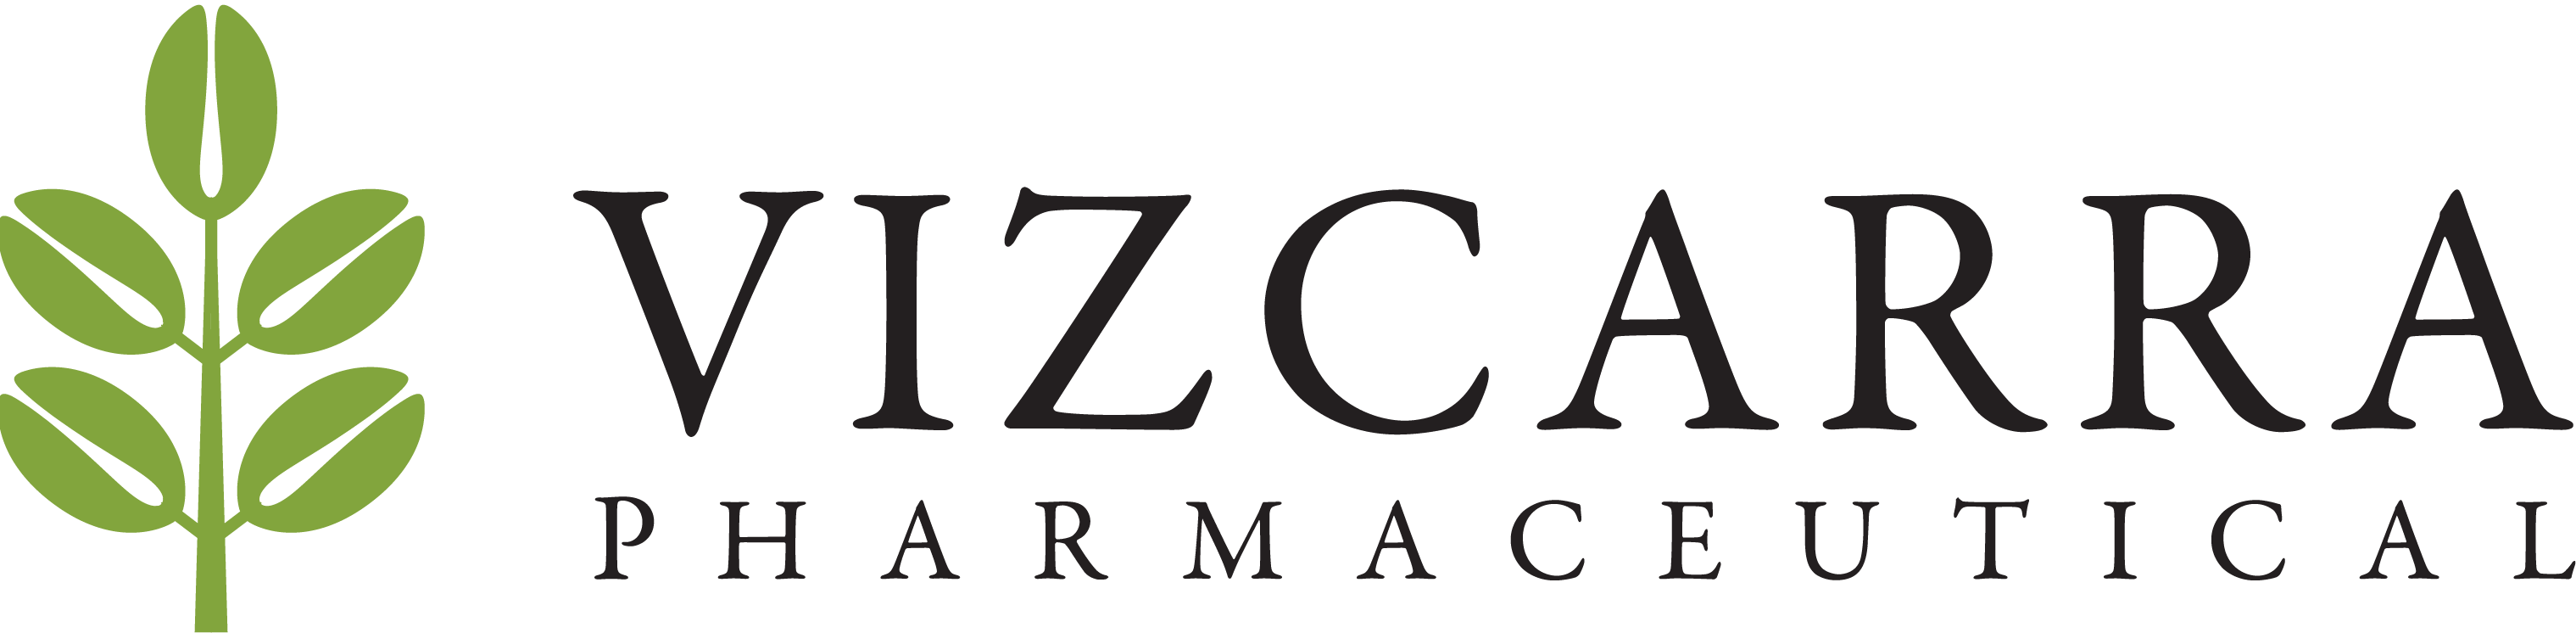 Vizcarra Pharma